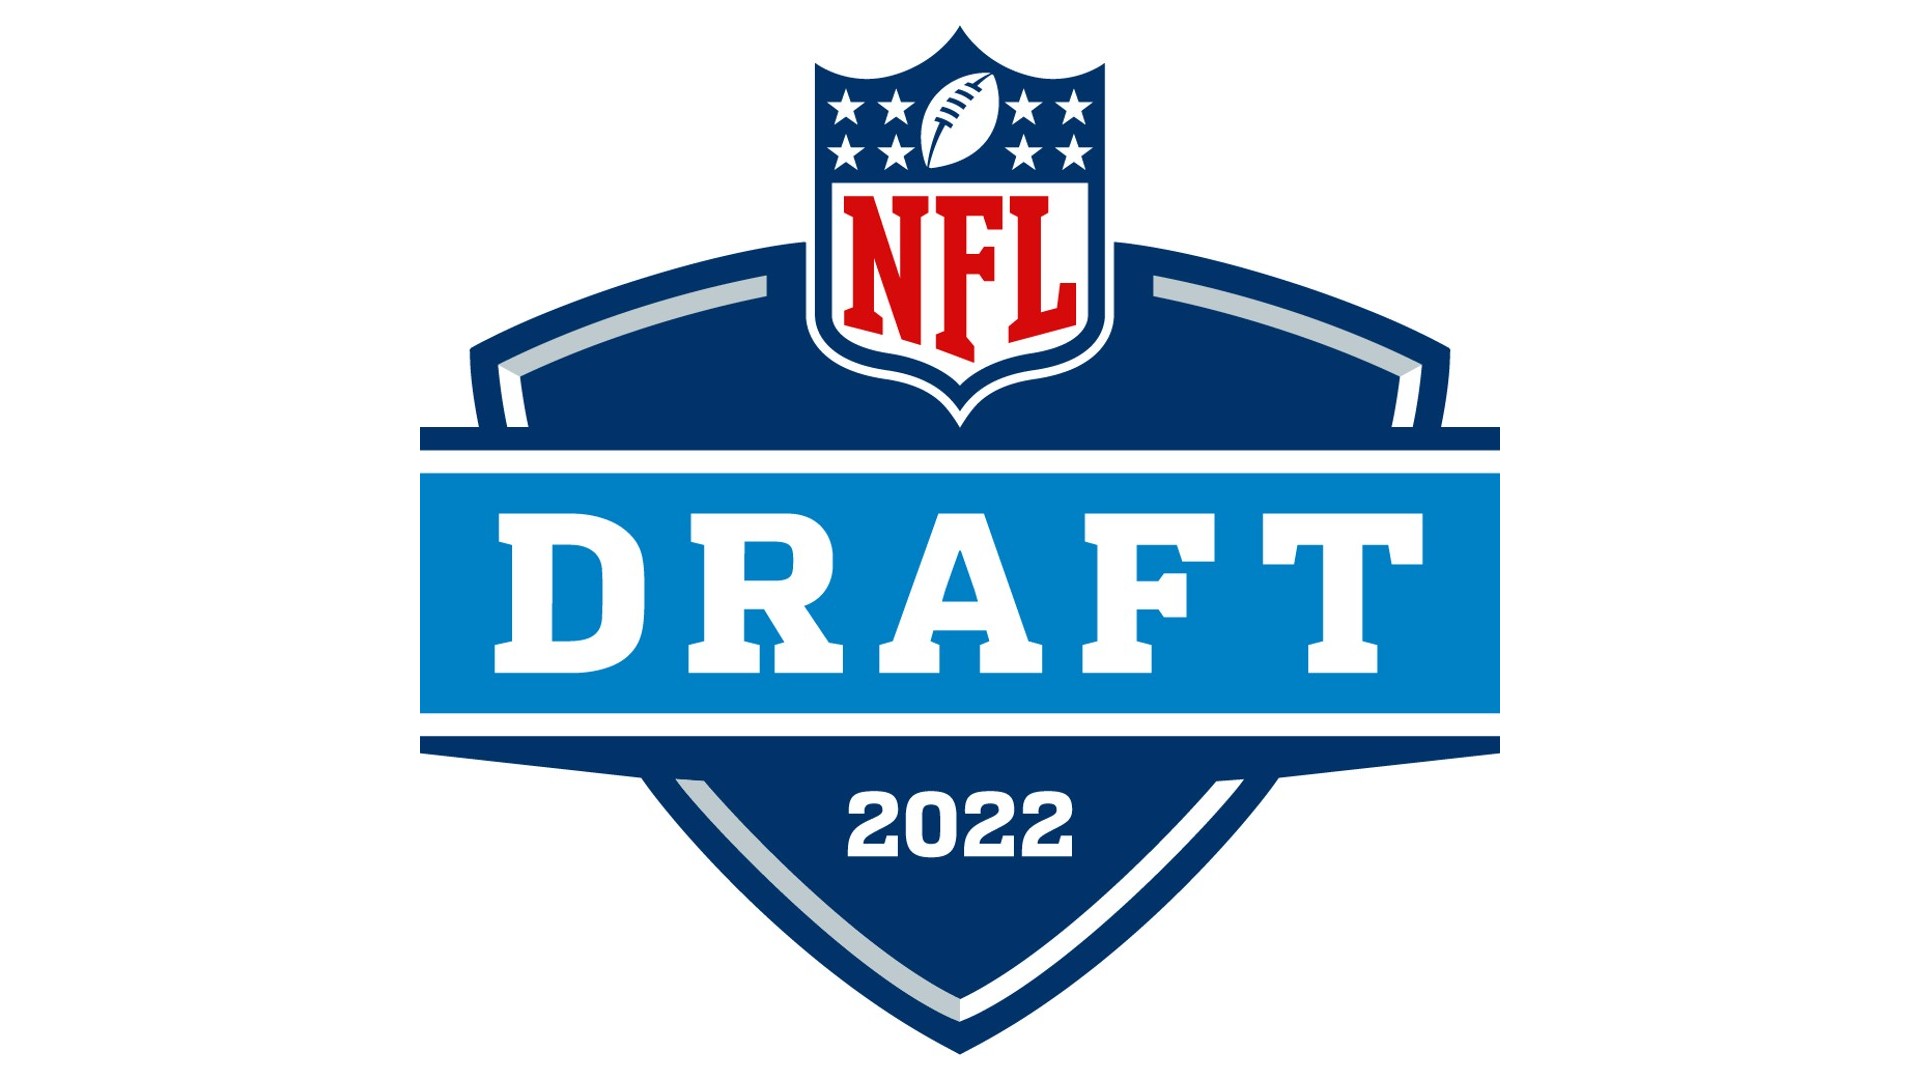 NFL Draft 2020